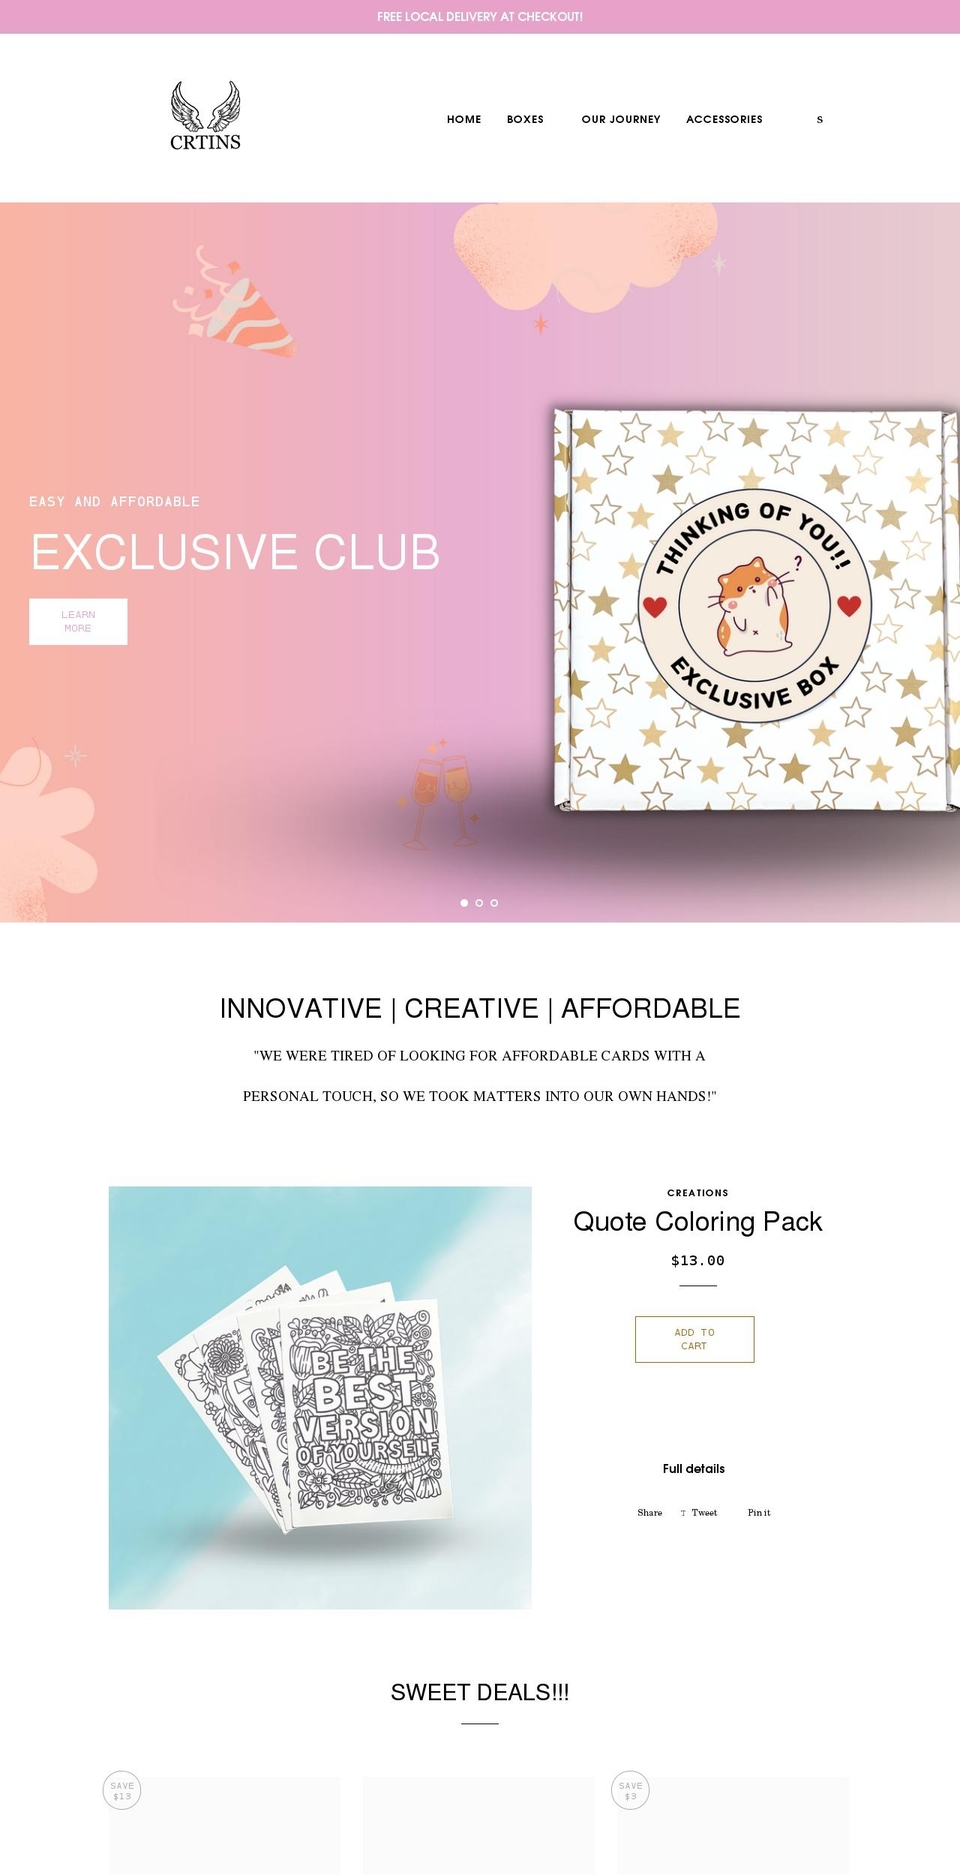 creations.business shopify website screenshot